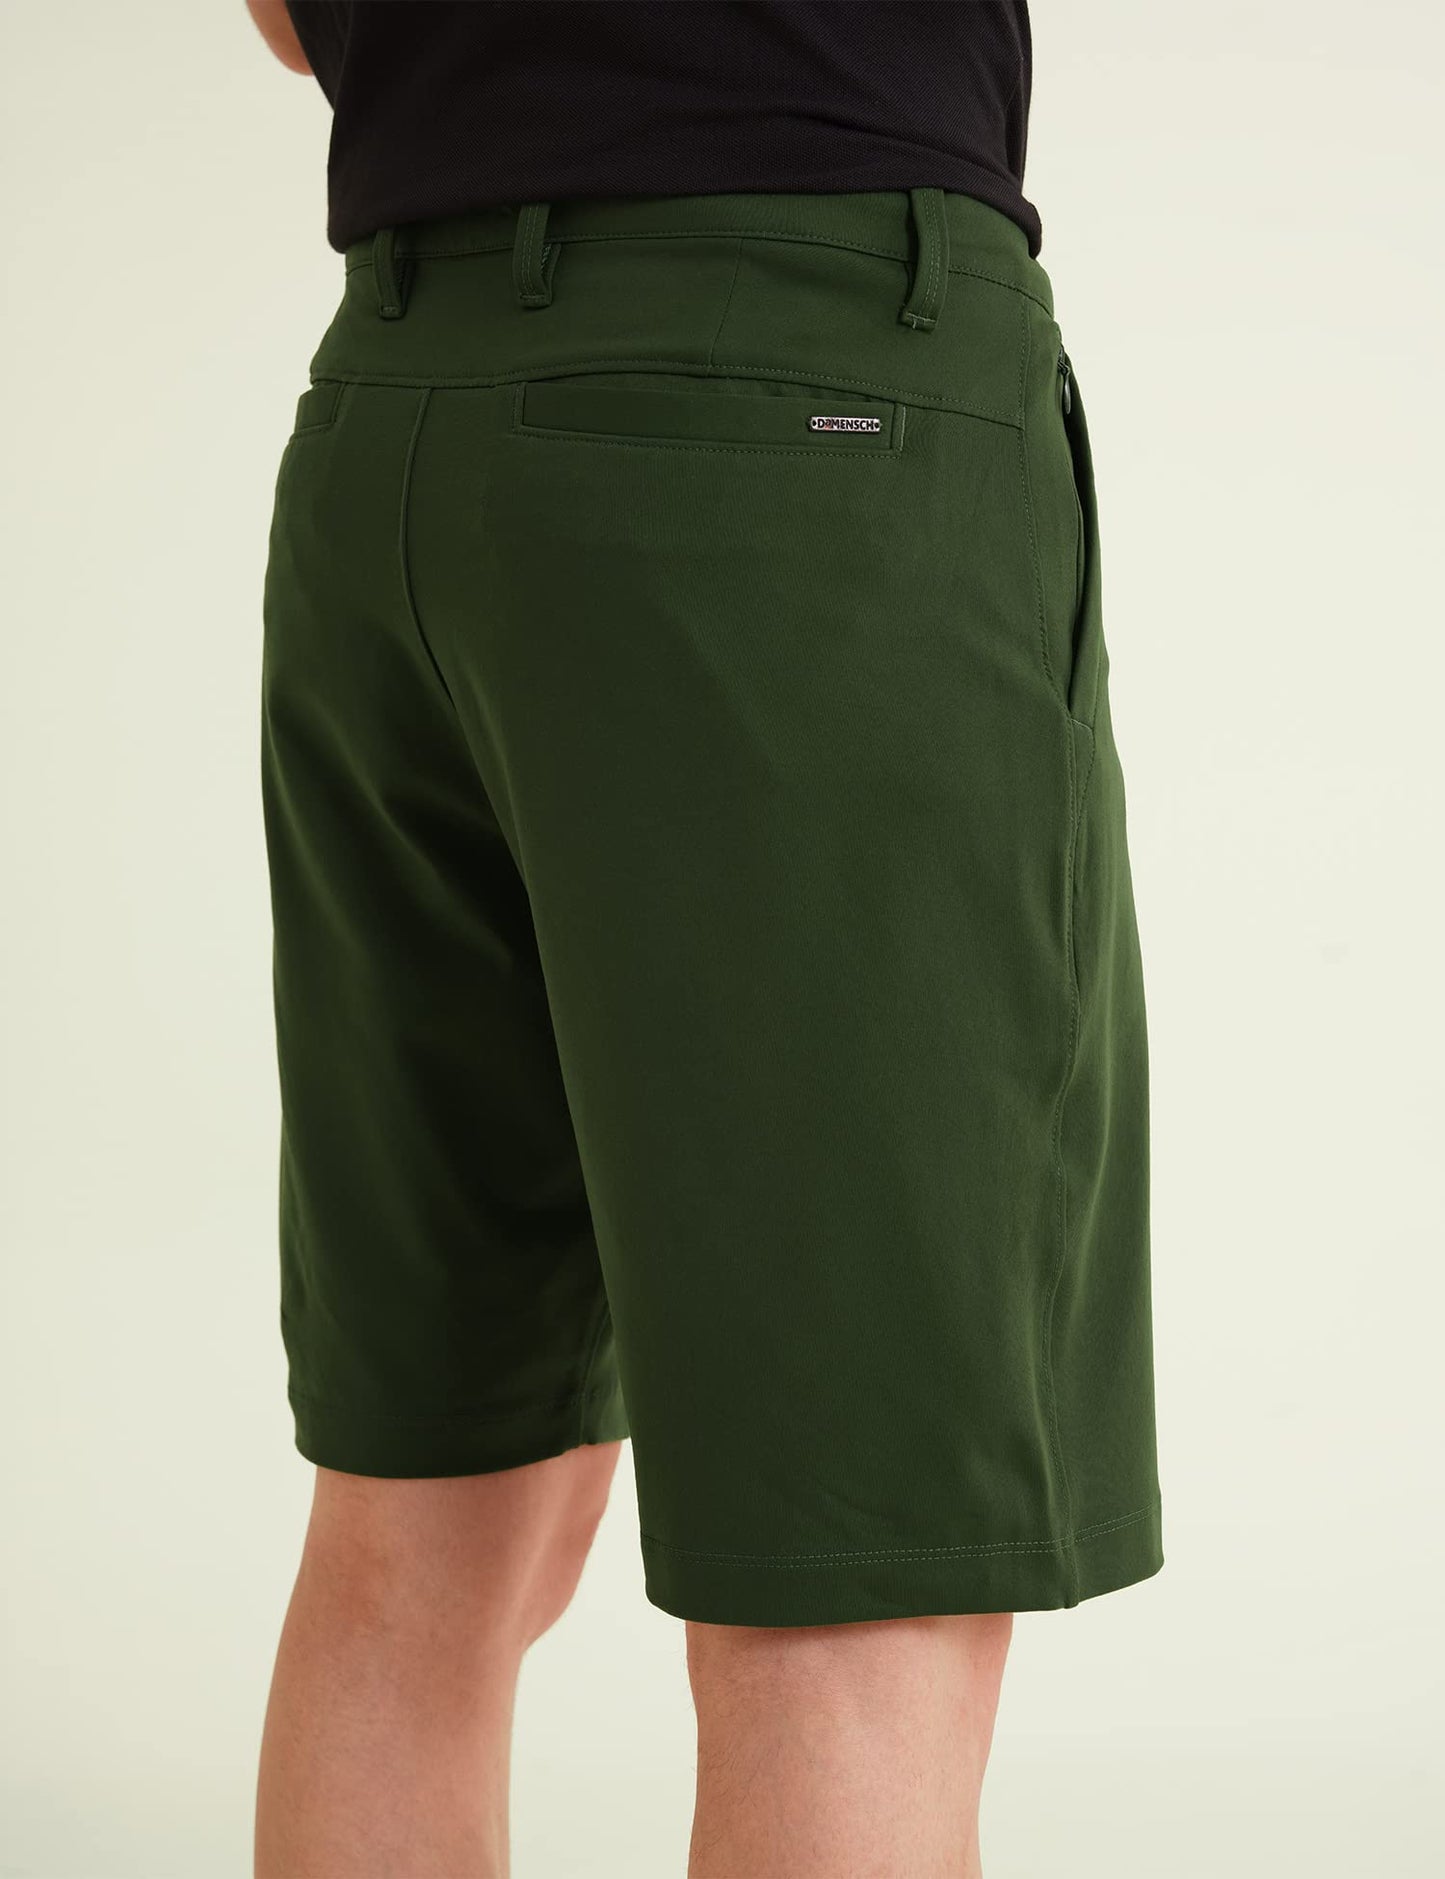 DAMENSCH Freedom 4-way Stretch Chino Shorts-Rifle Green-Large